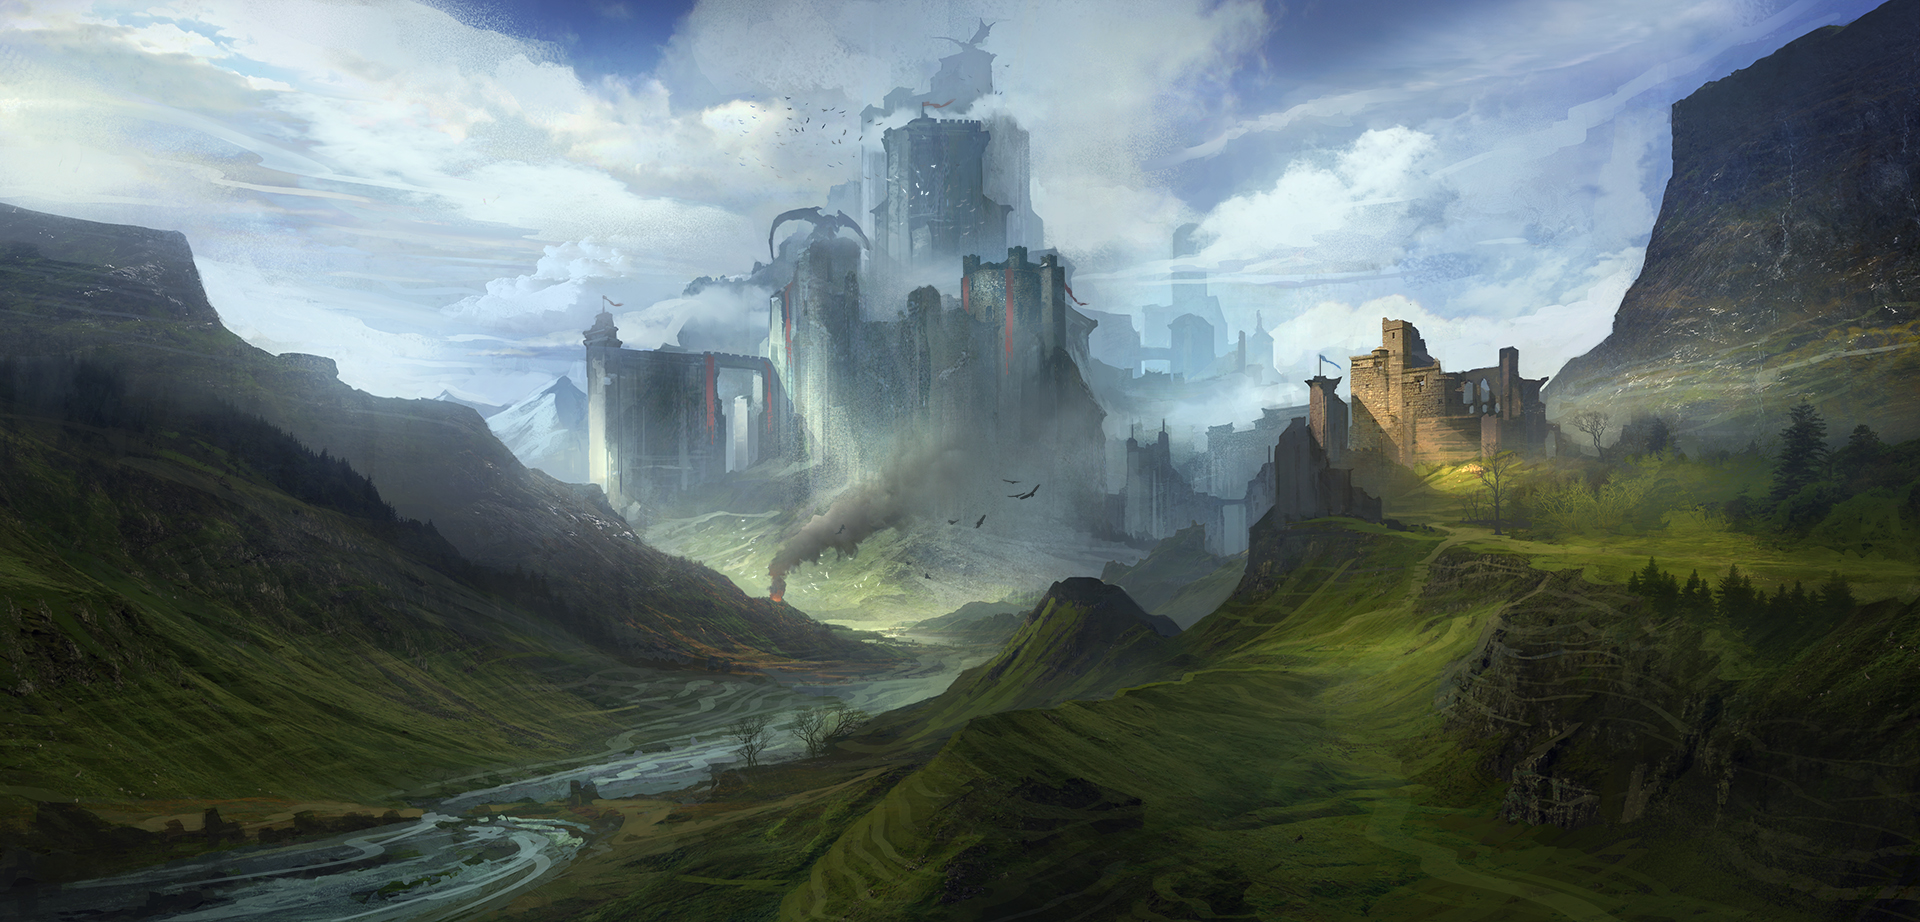 Castle of Dragons by SergeyZabelin on DeviantArt